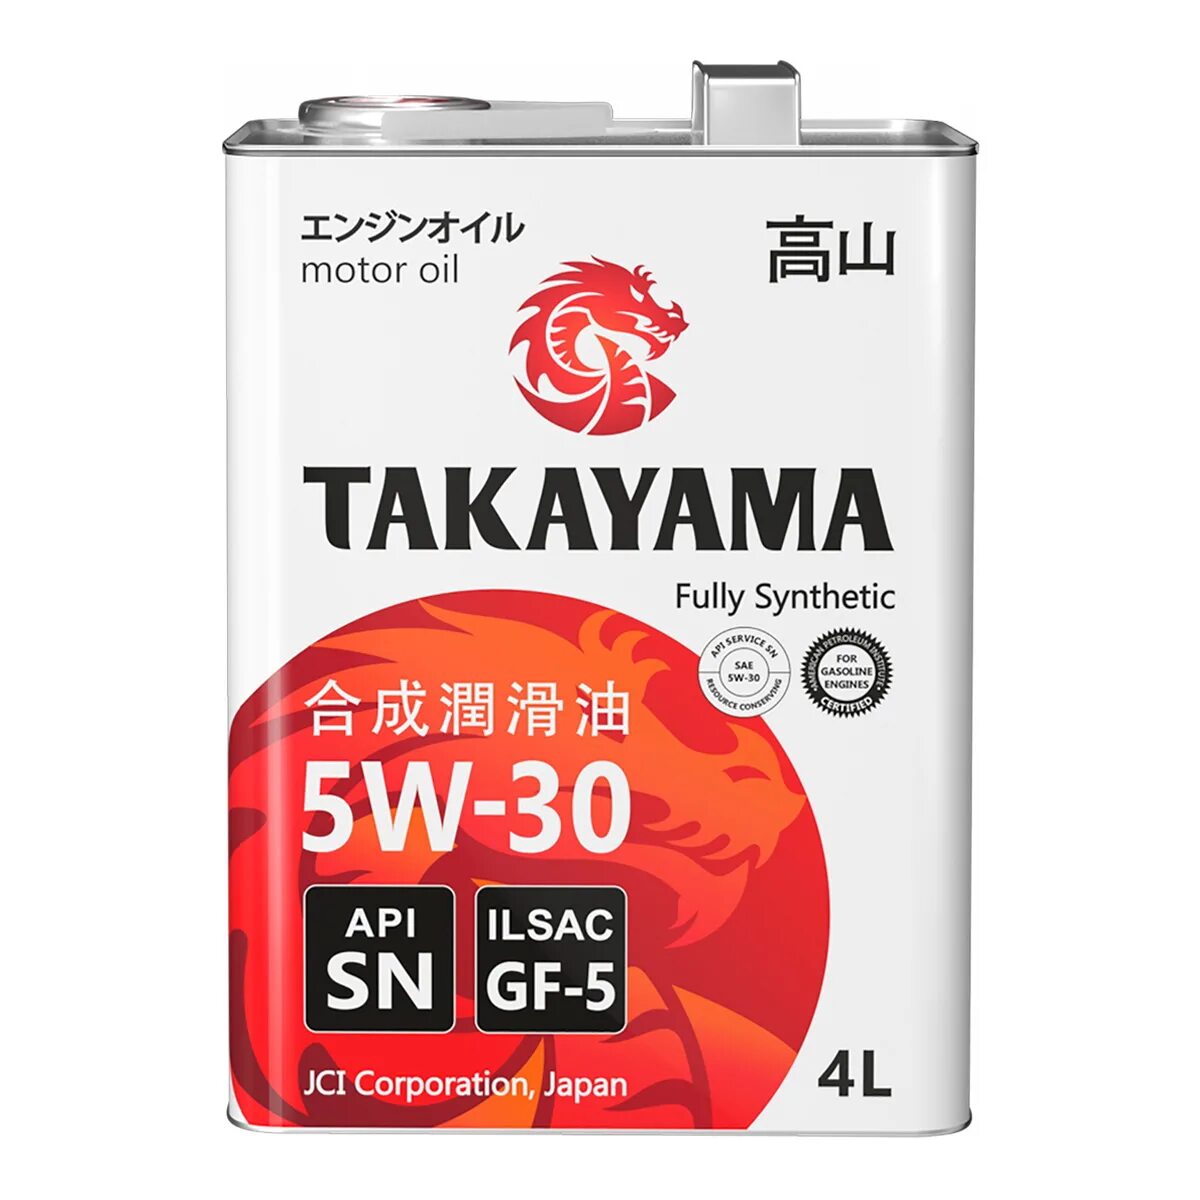 Takayama 5w30 SN gf-5. Такаяма 5w30 ILSAC 4л 605043. Takayama SAE 5w-30, ILSAC gf-5, API SN (бочка 200л). Моторное масло Takayama 5w-40 синтетическое 4 л.